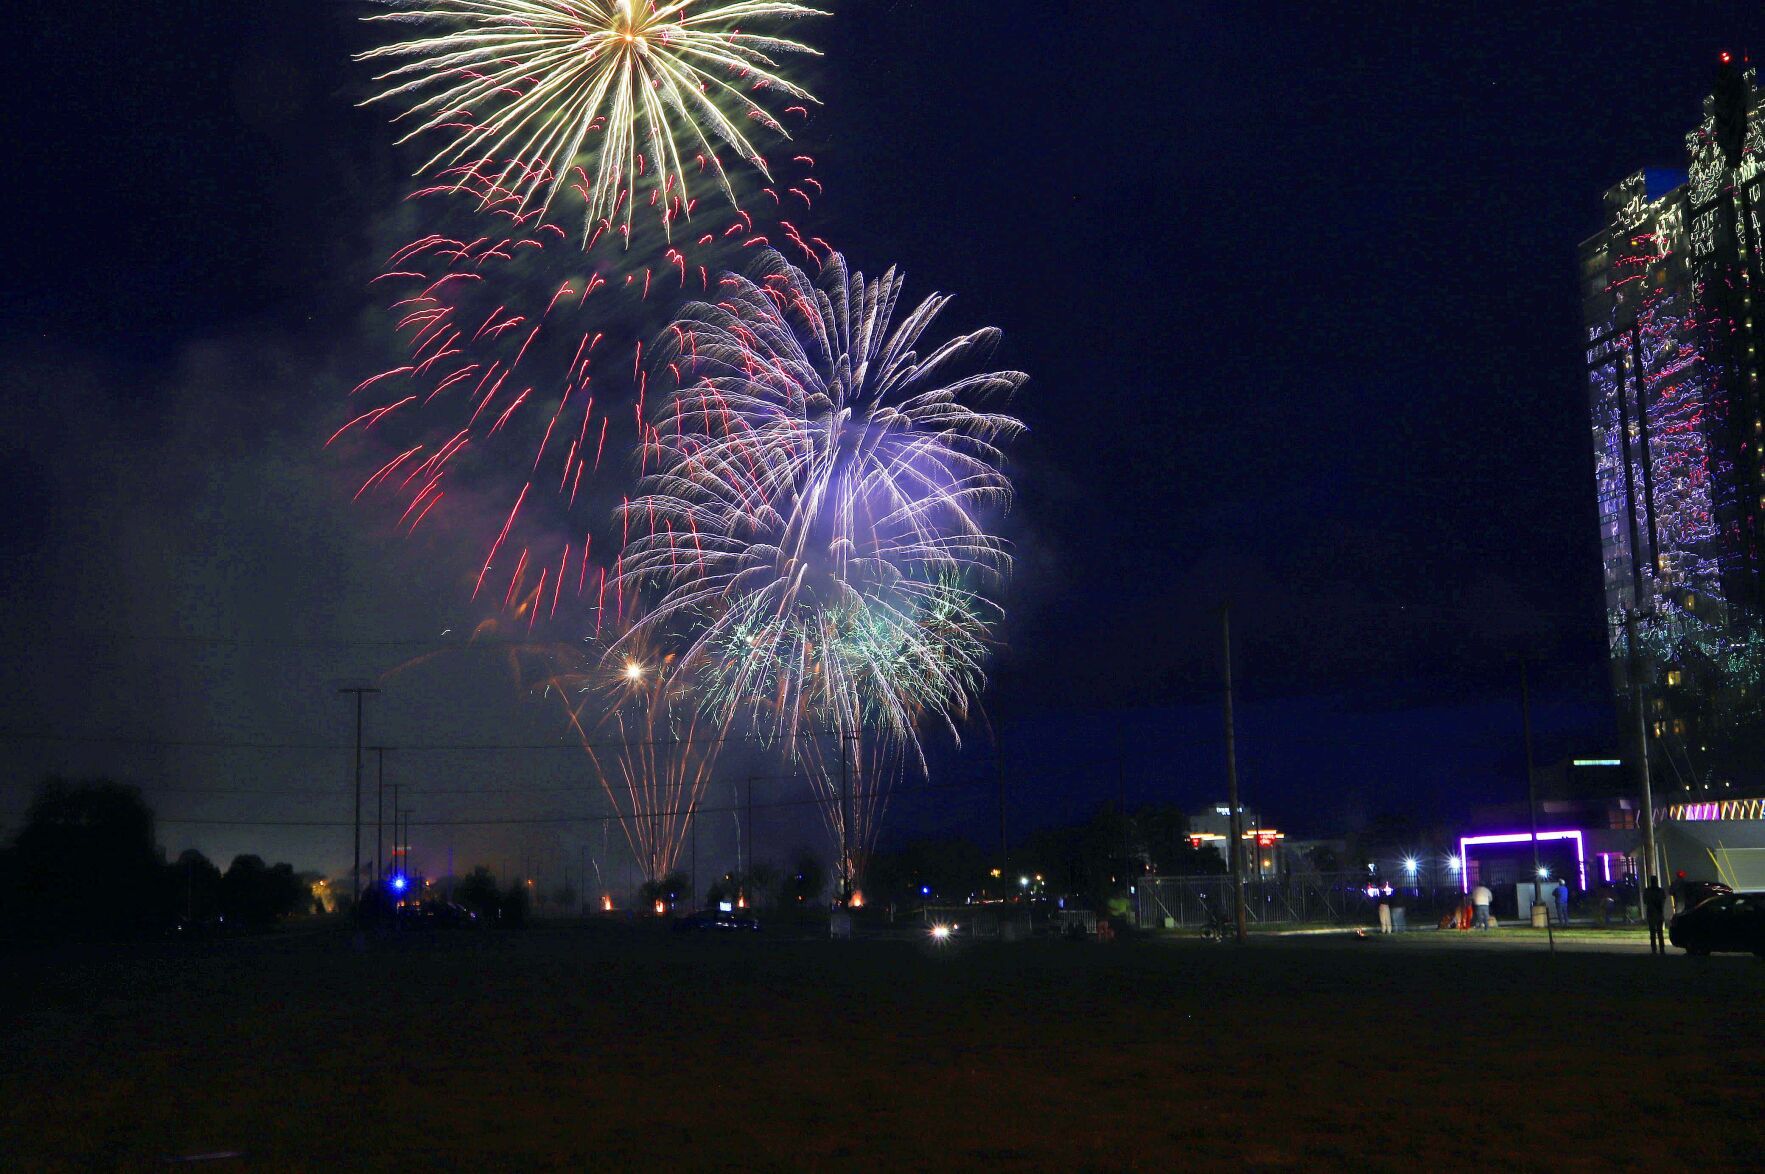 jena choctaw pines casino fireworks